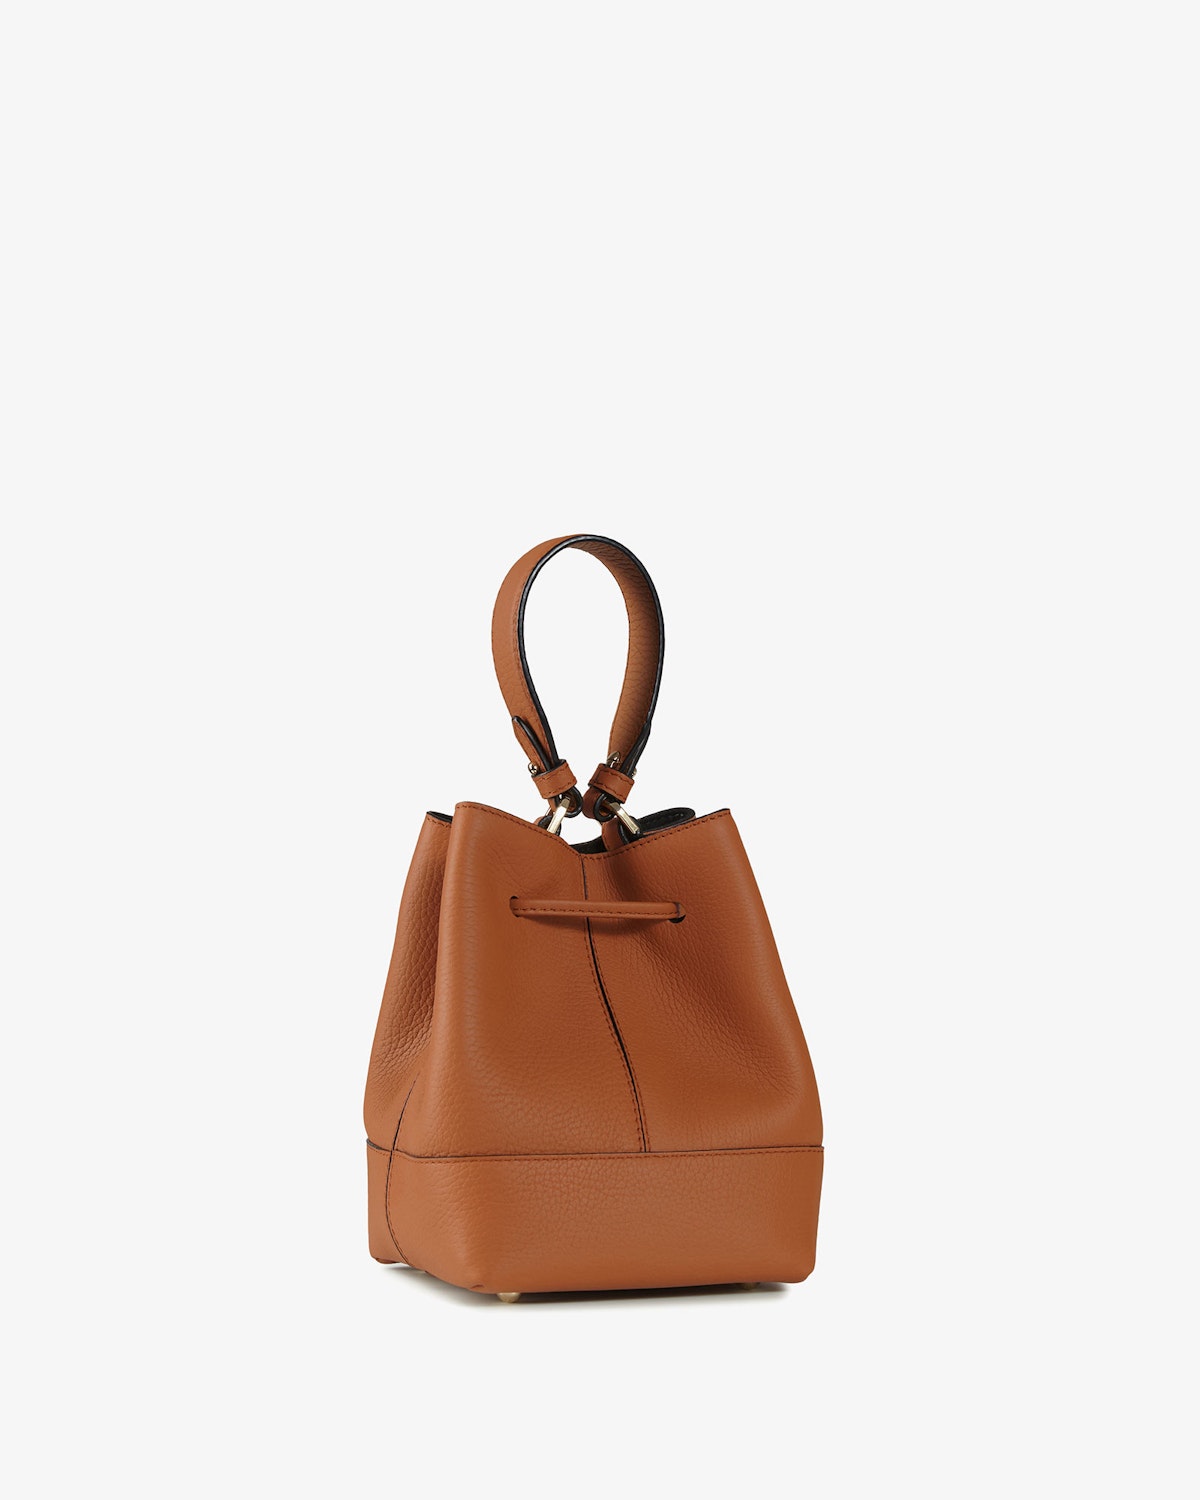 Strathberry - Lana Osette - Leather Mini Bucket Bag - Tan | Strathberry